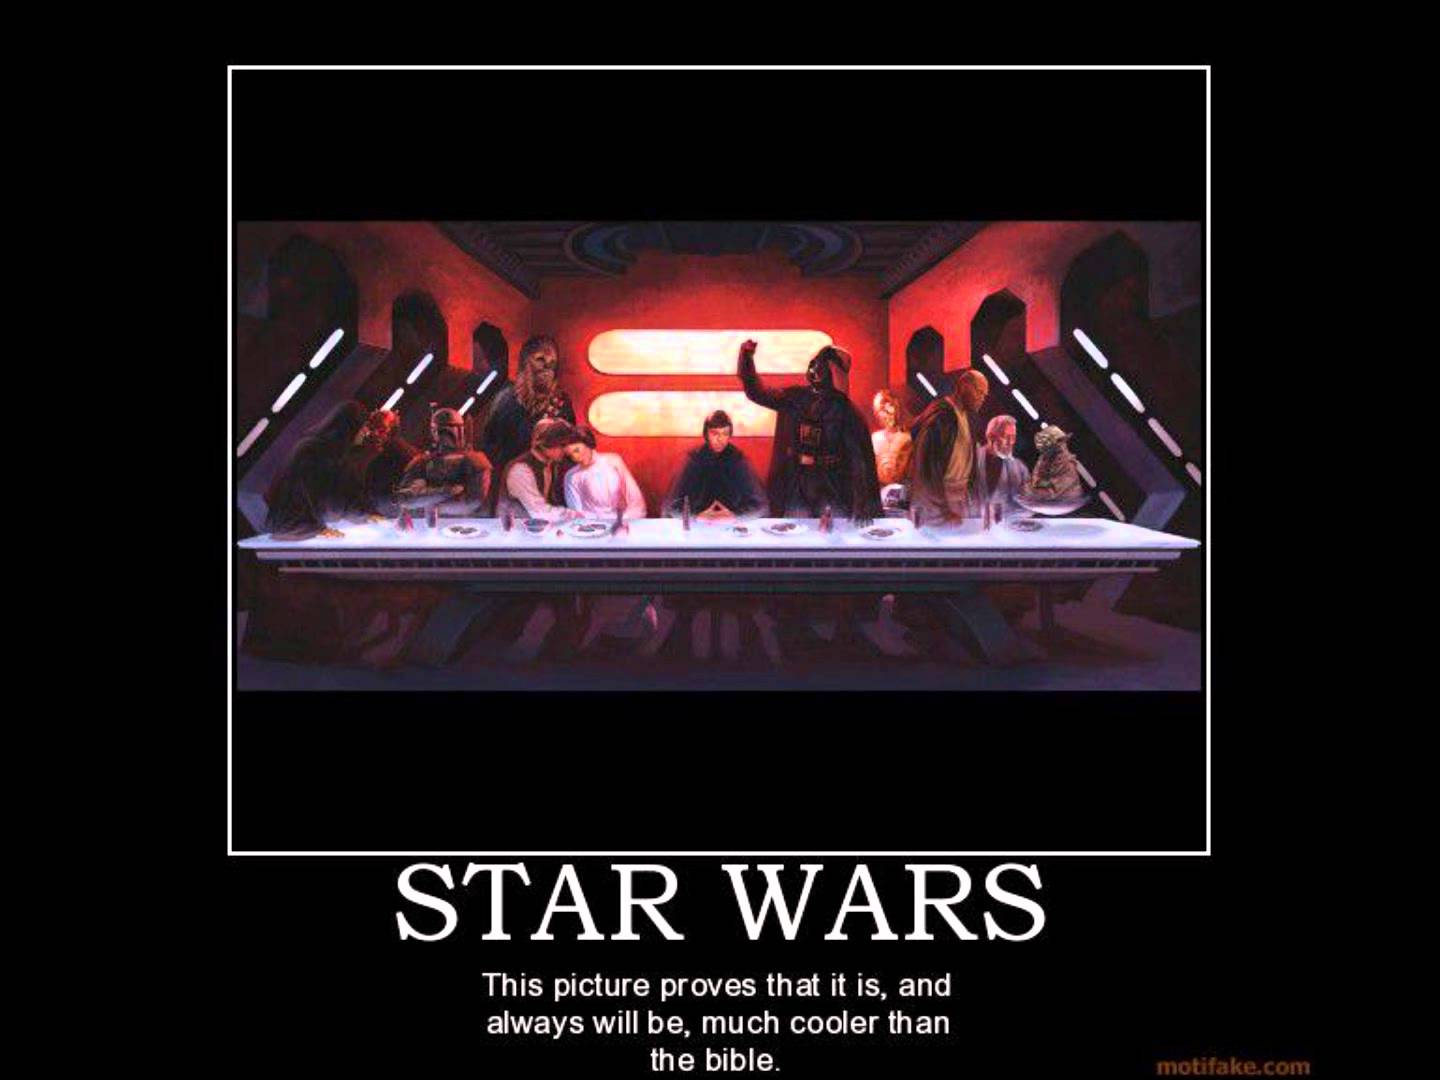 Funny Star Wars Image